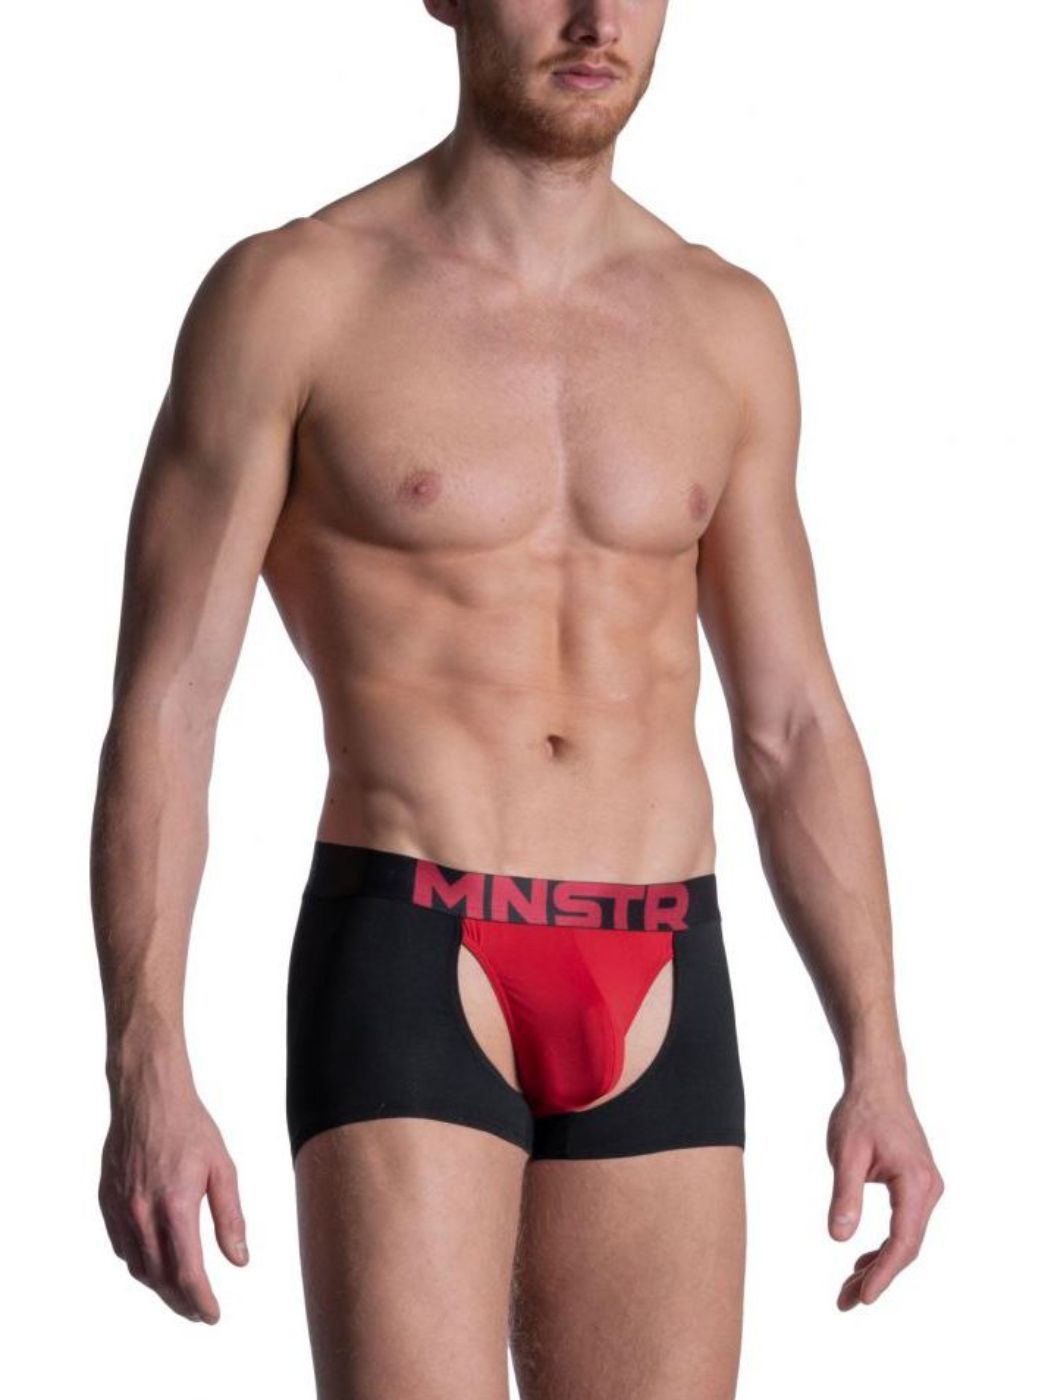 Manstore Chaps Pants | Black/Red